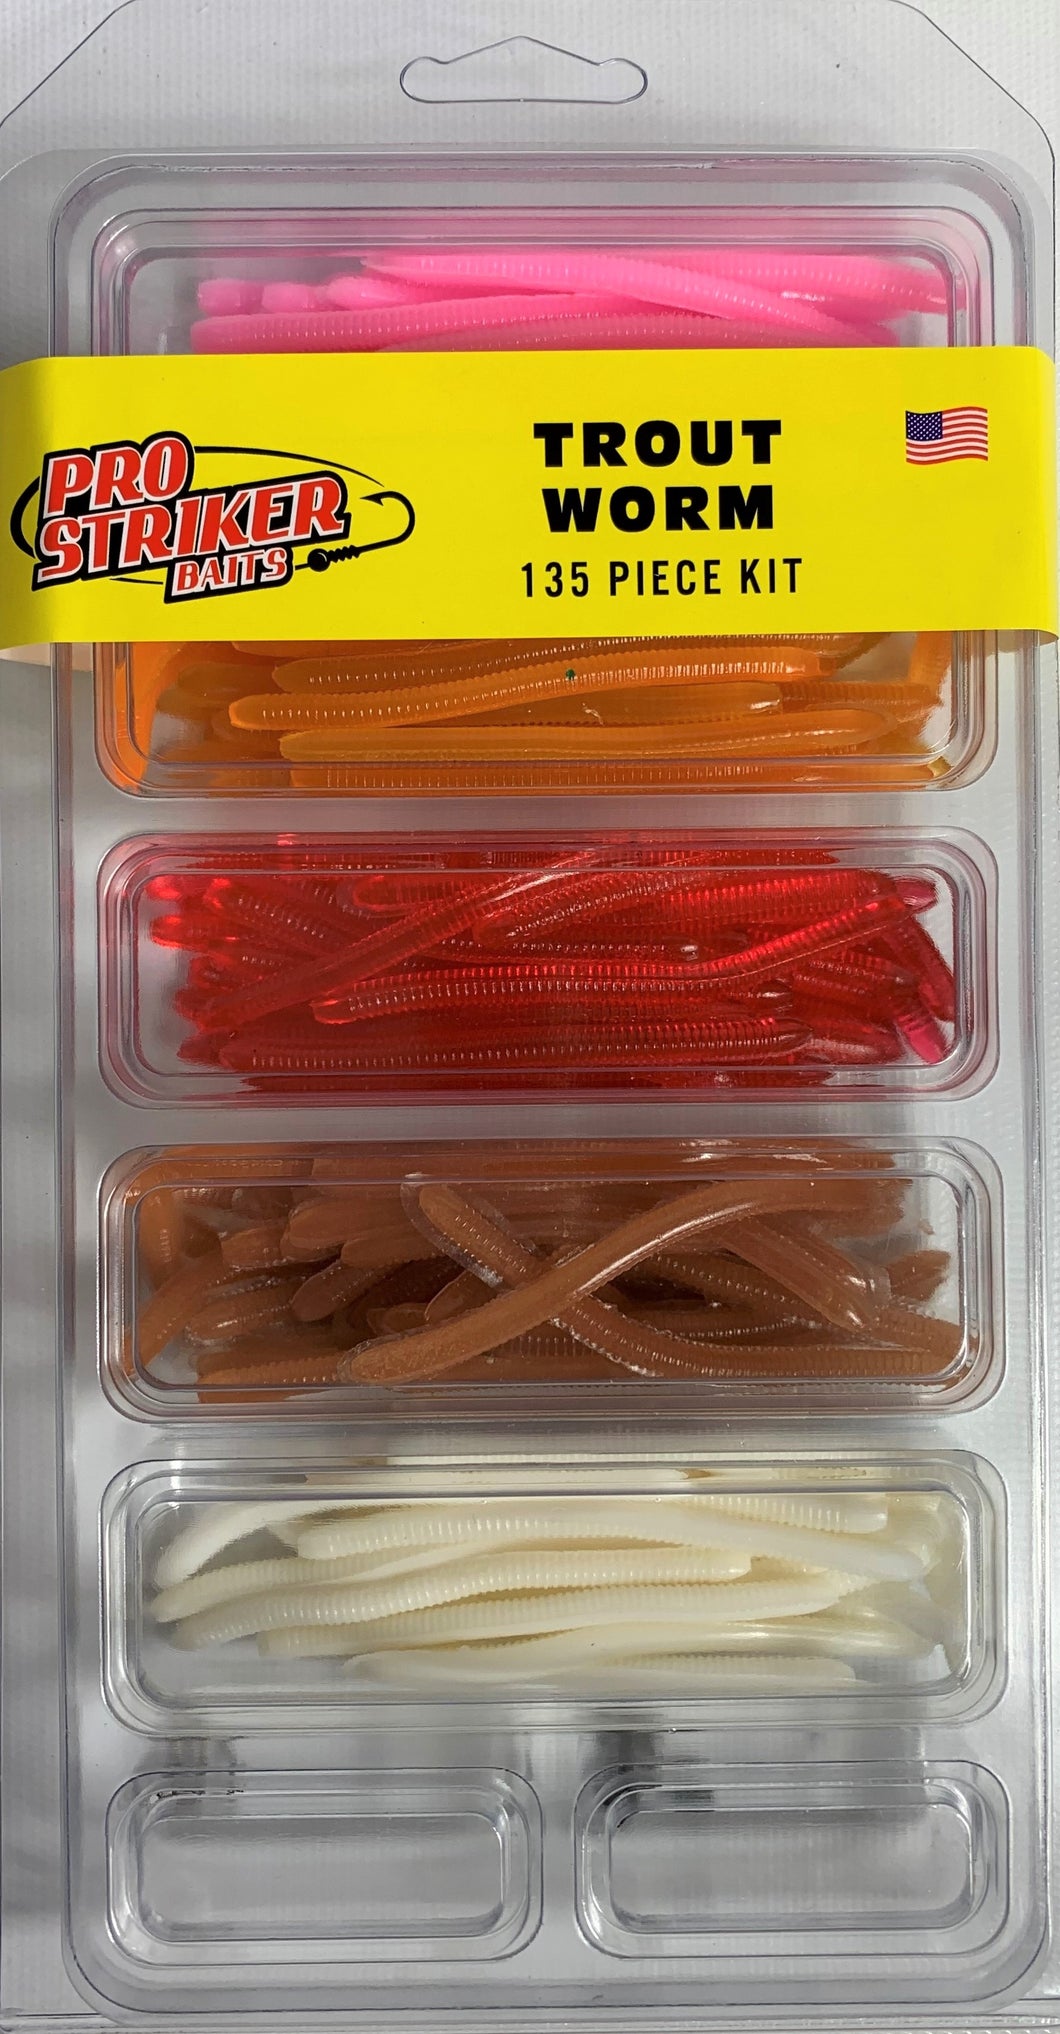 Pro Striker Trout Worm 135-Piece Kit – Tackle HD